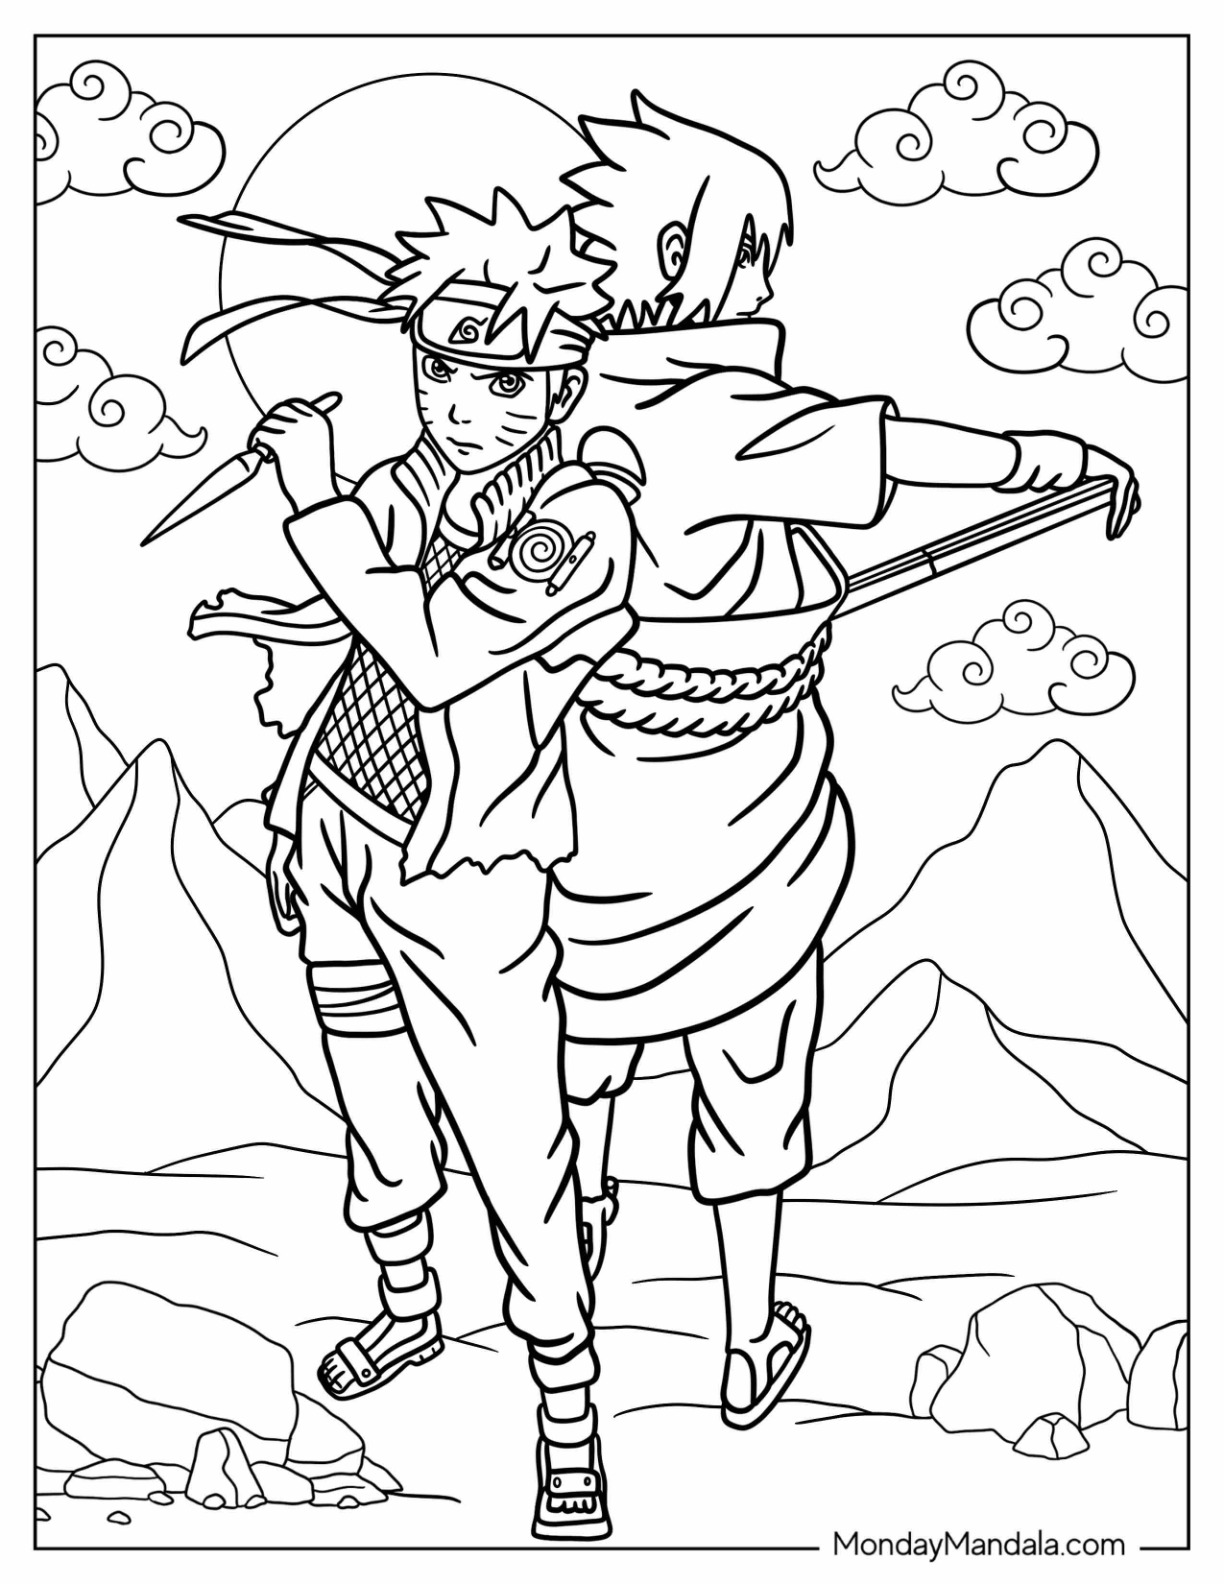 Sasuke coloring pages free pdf printables